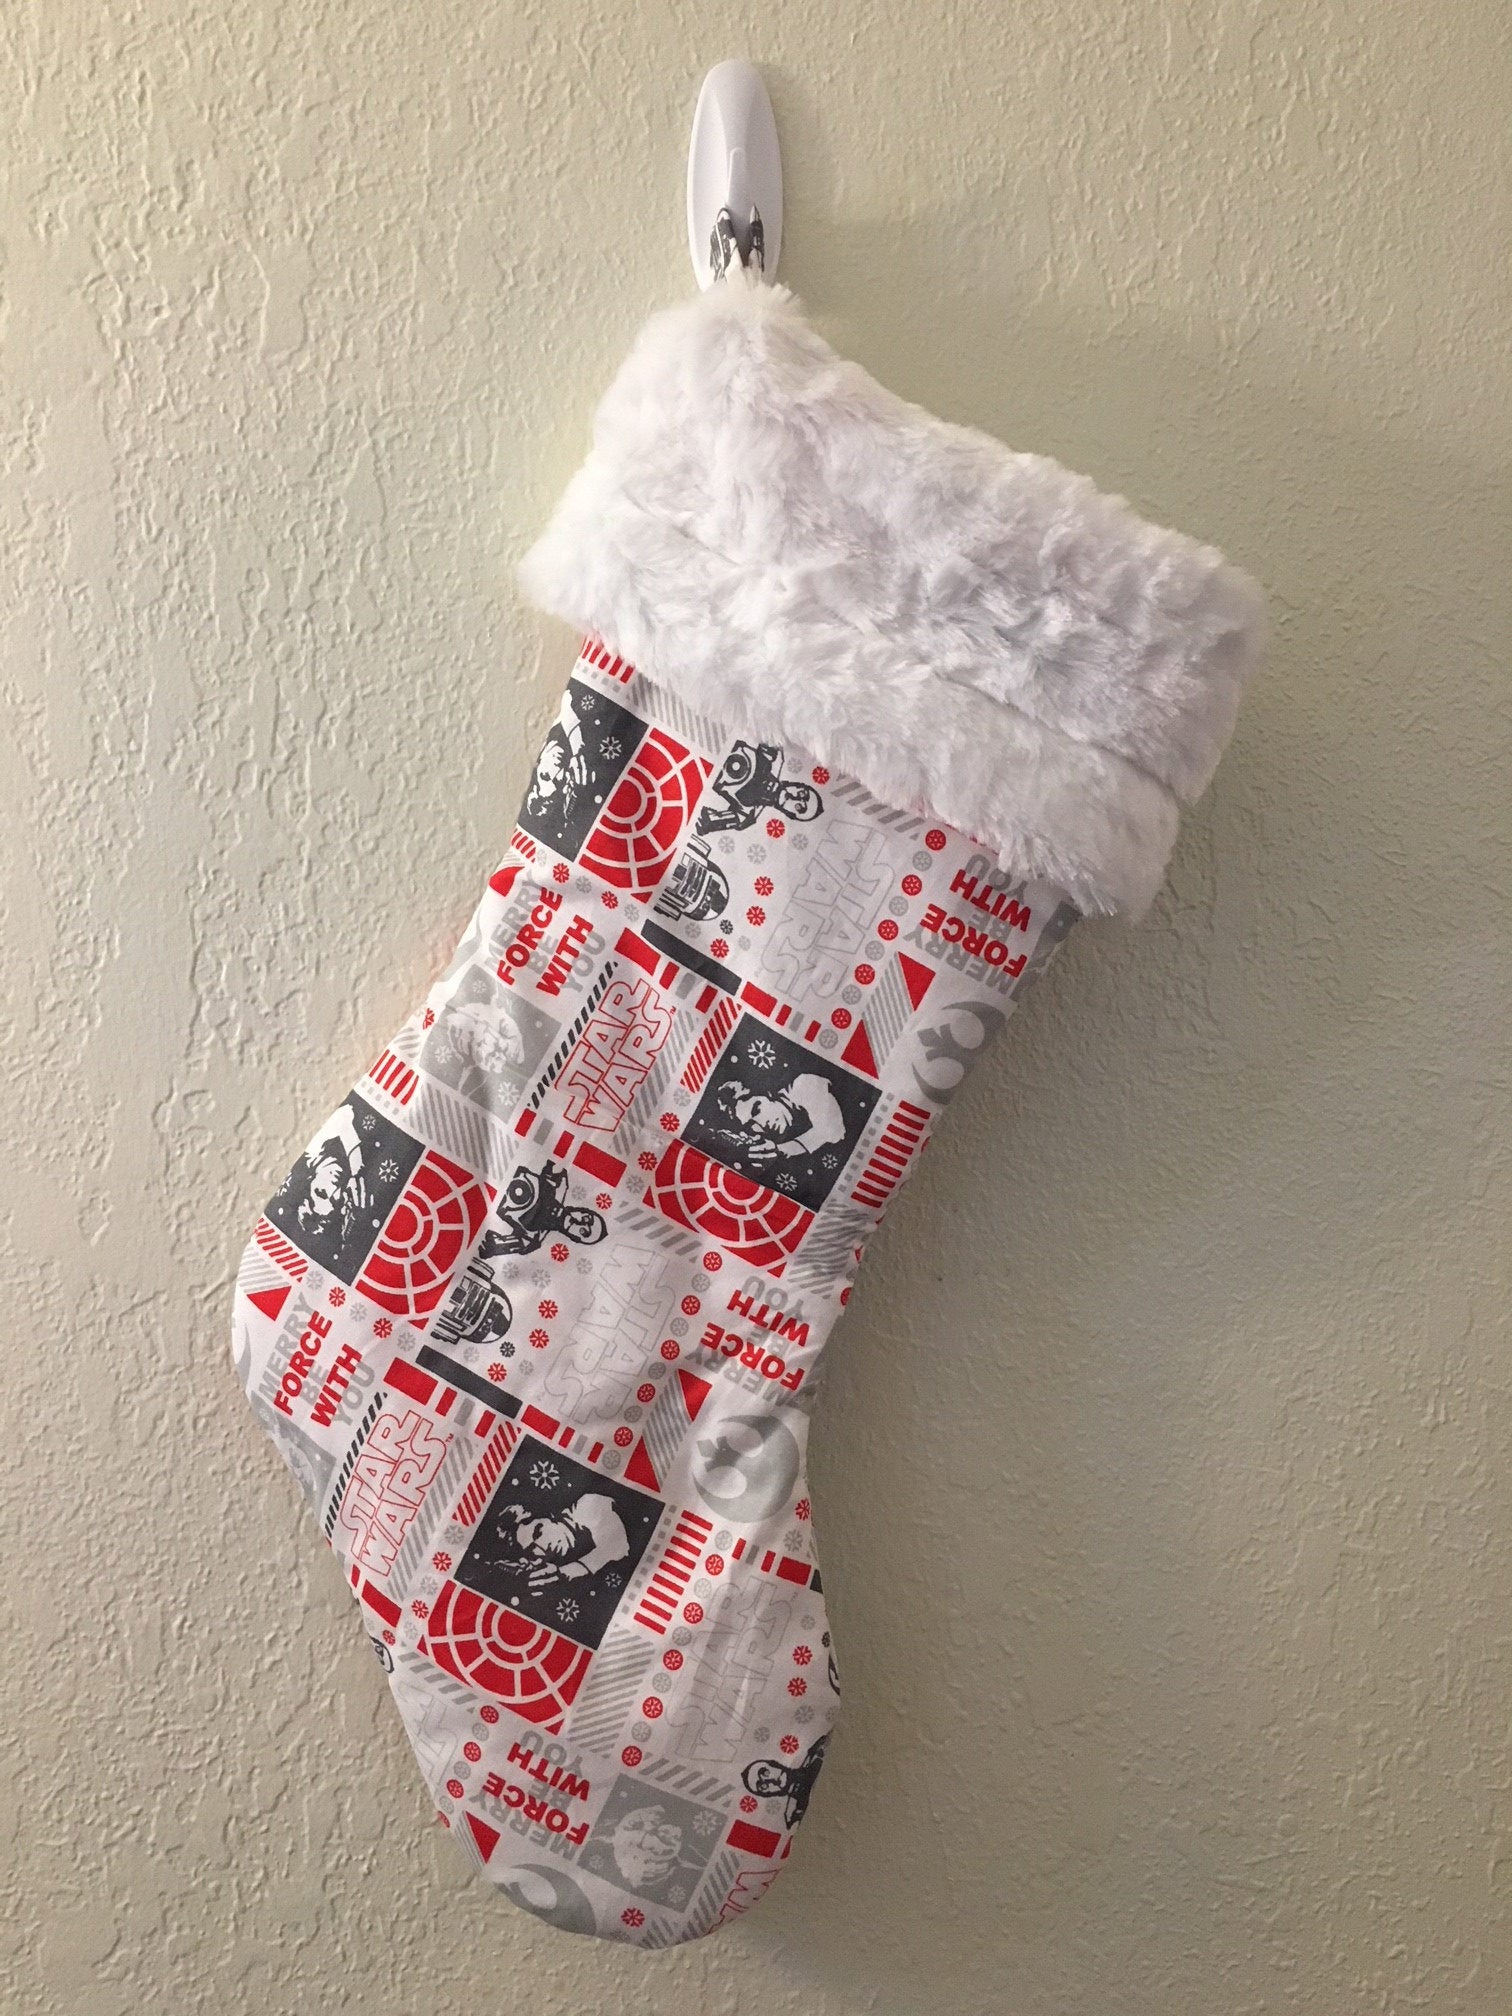 Star Wars Christmas stockings